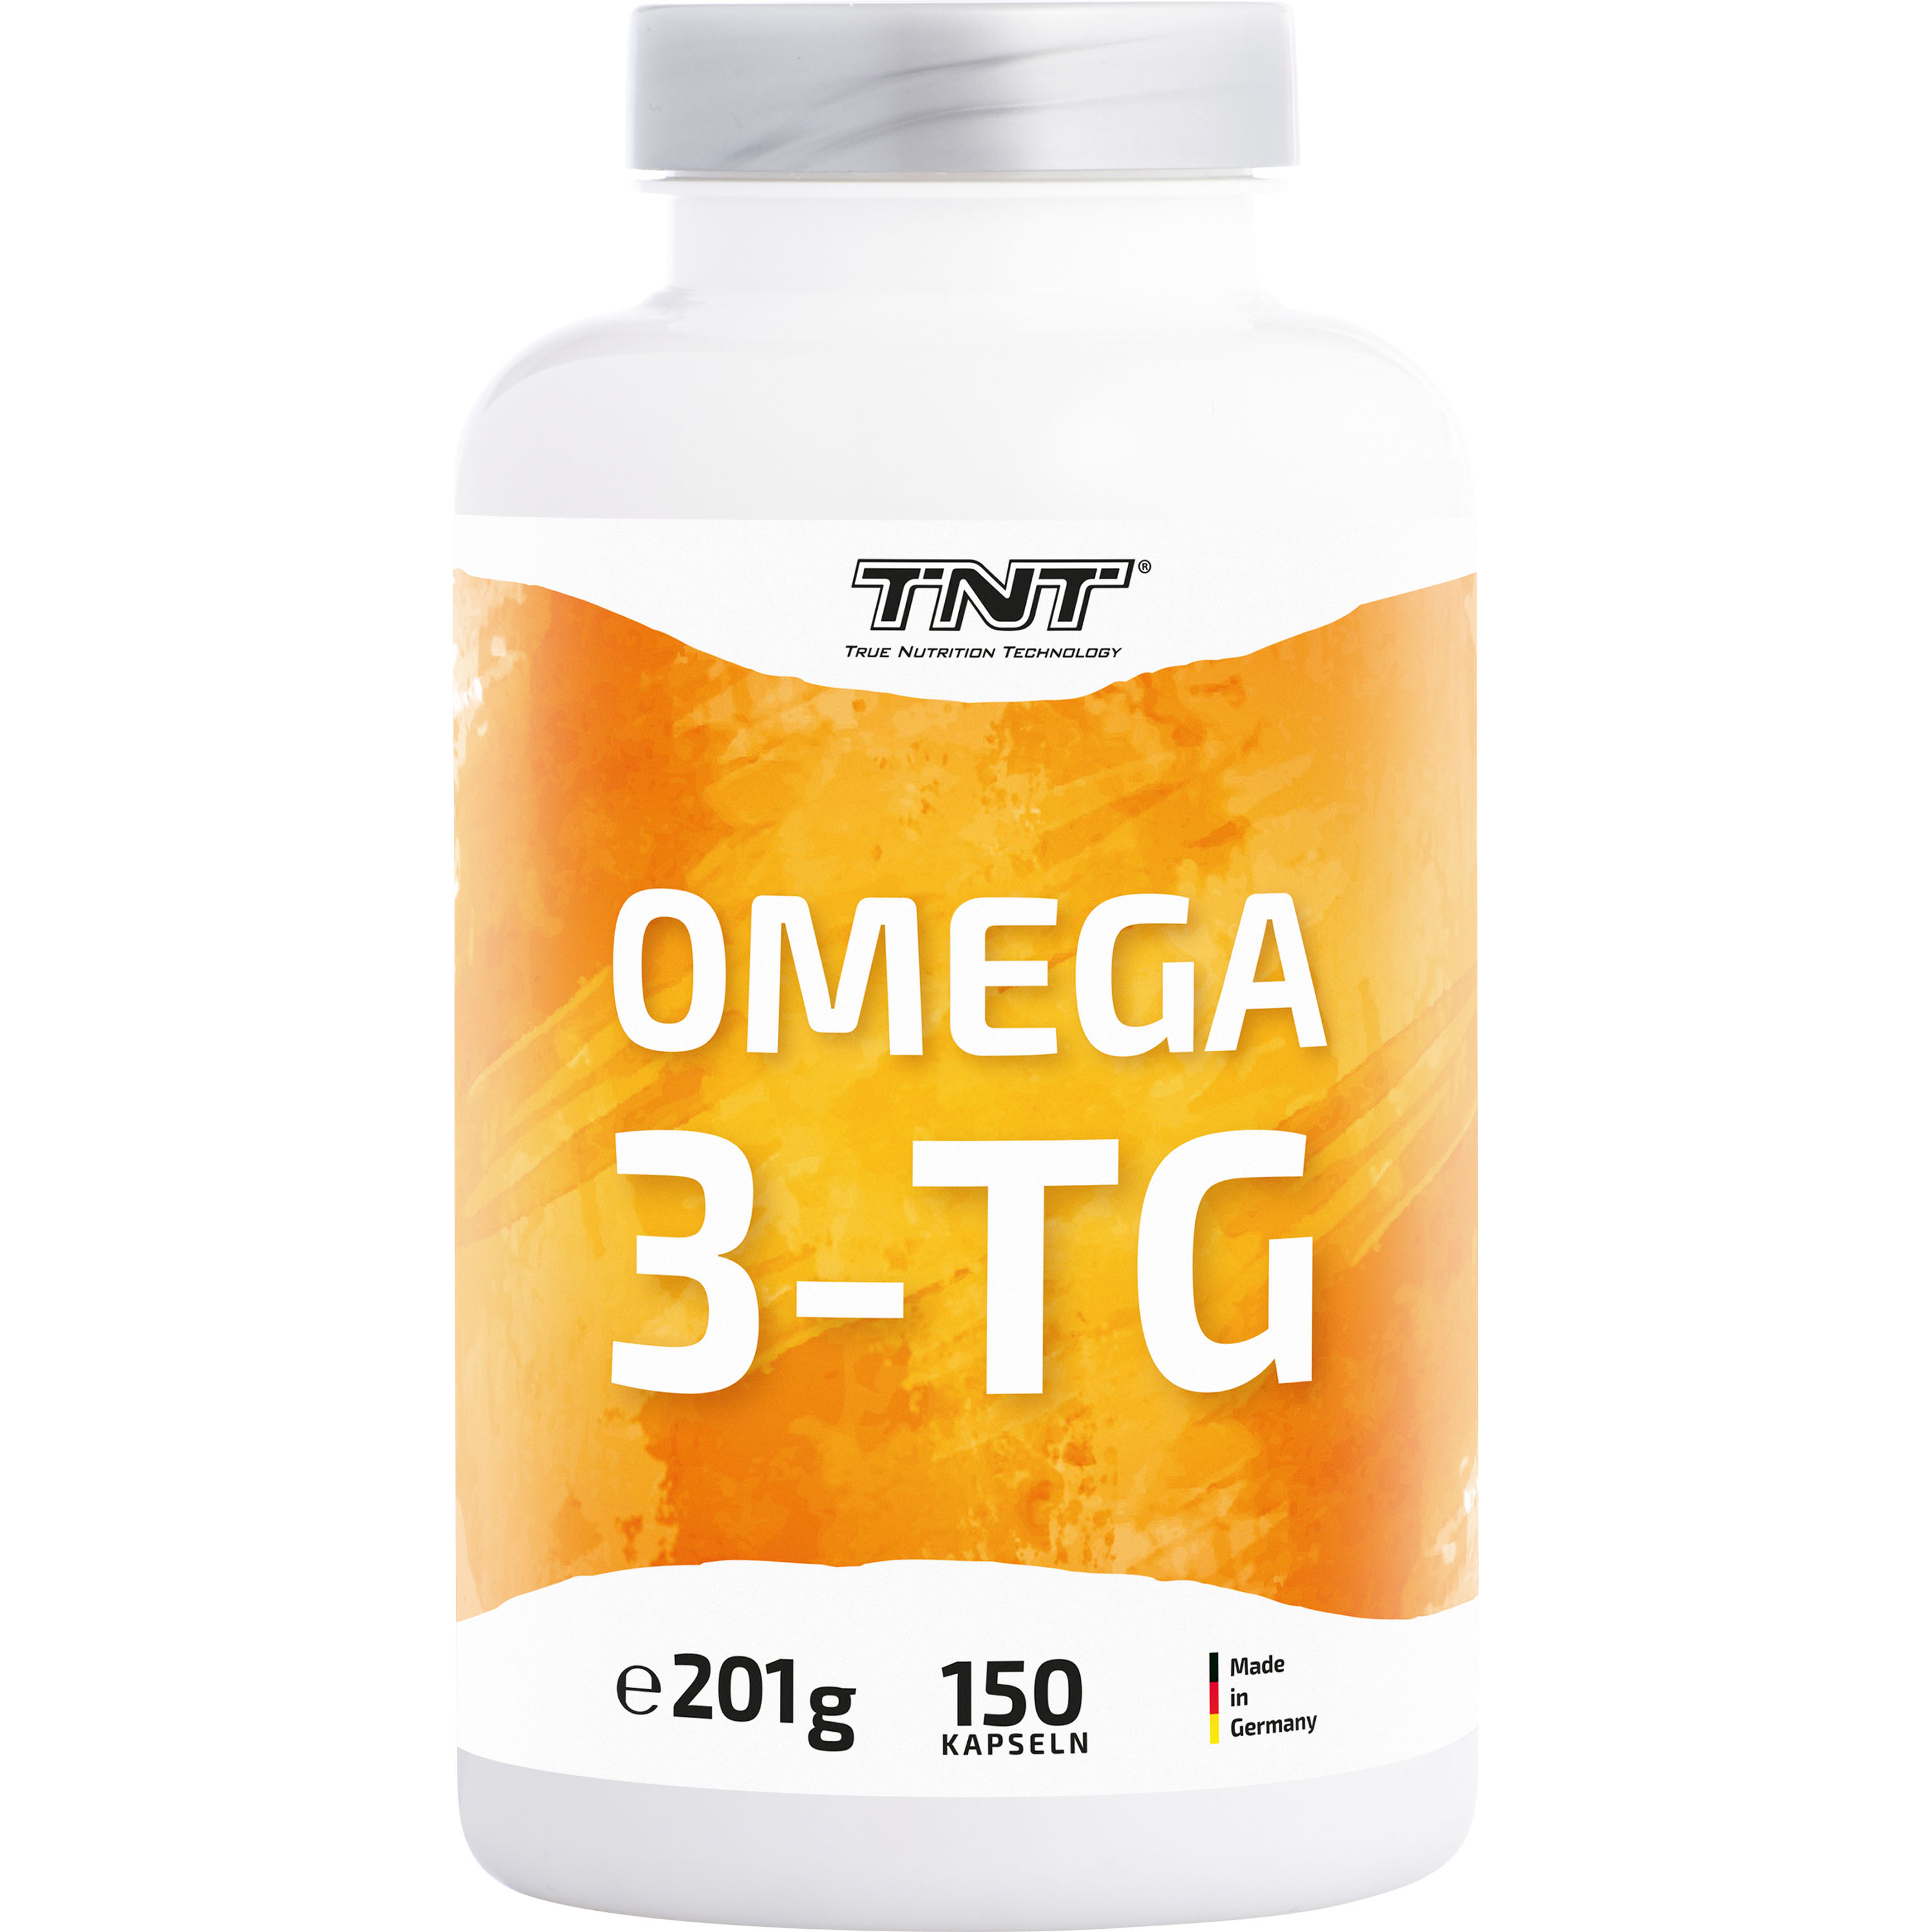 TNT Omega 3-TG Fischöl Kapseln in natürlicher Triglyceride Form